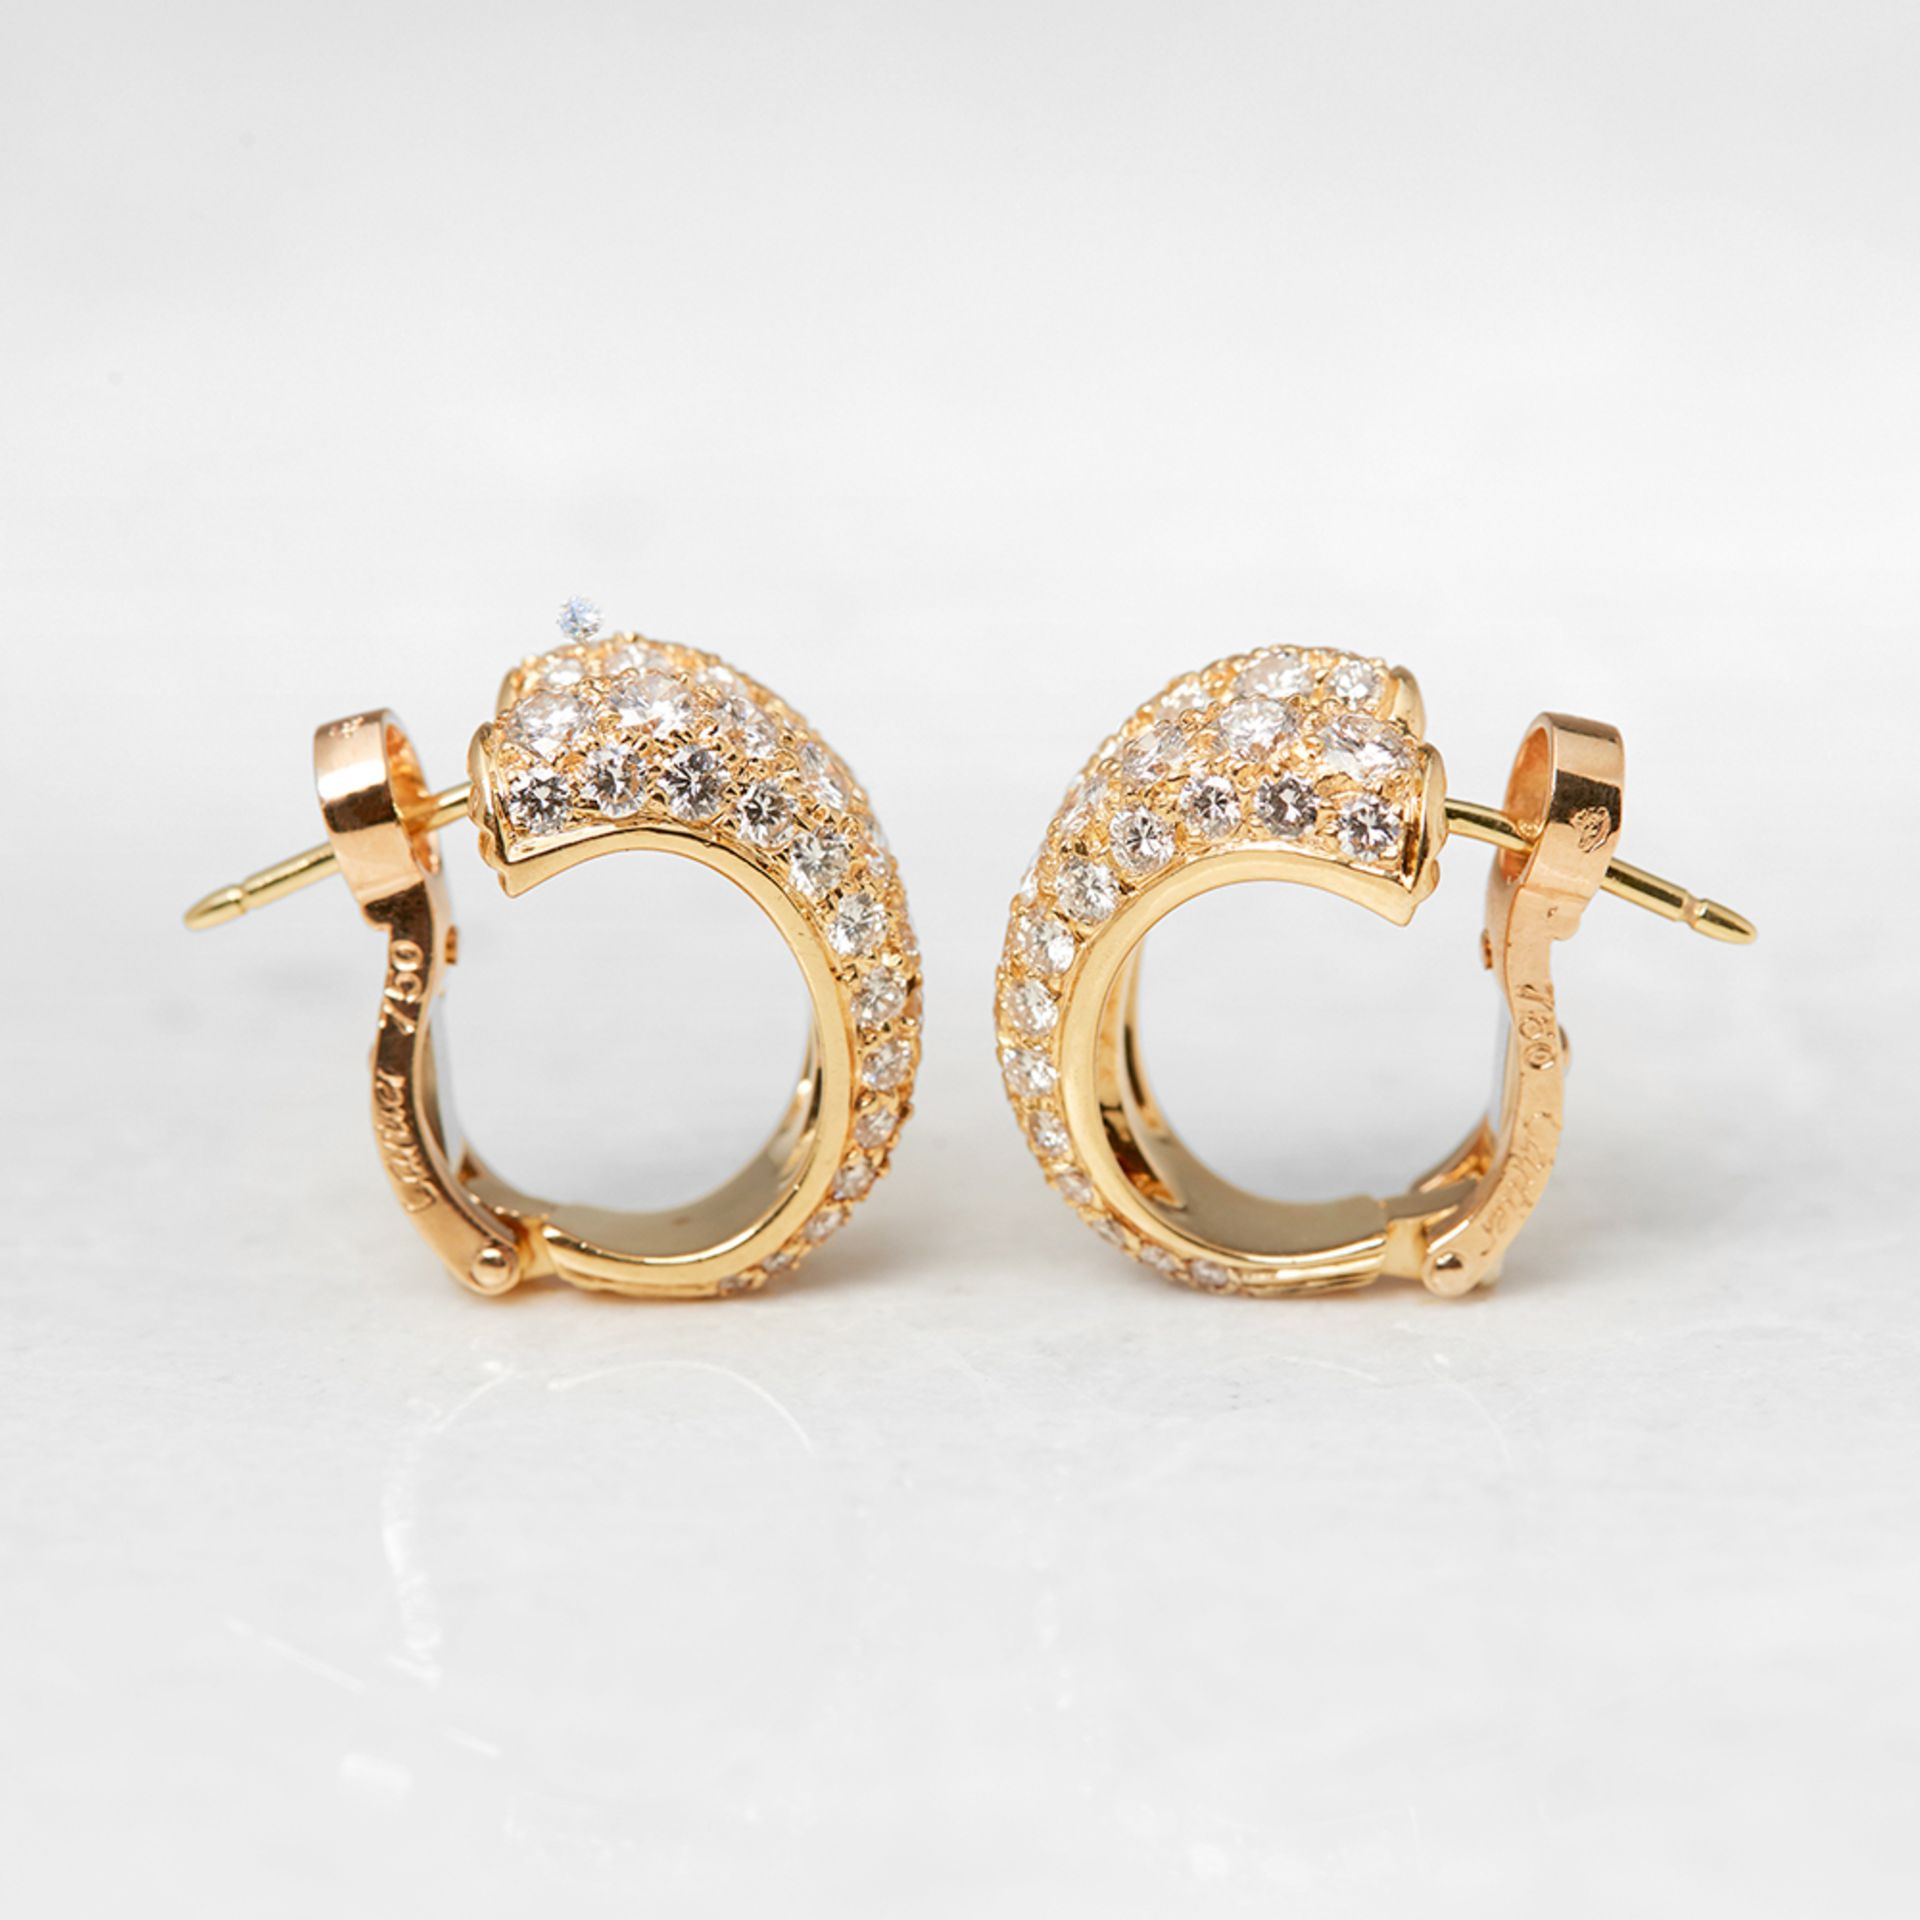 Cartier 18k Yellow Gold Double Hoop Diamond Earrings - Image 6 of 20